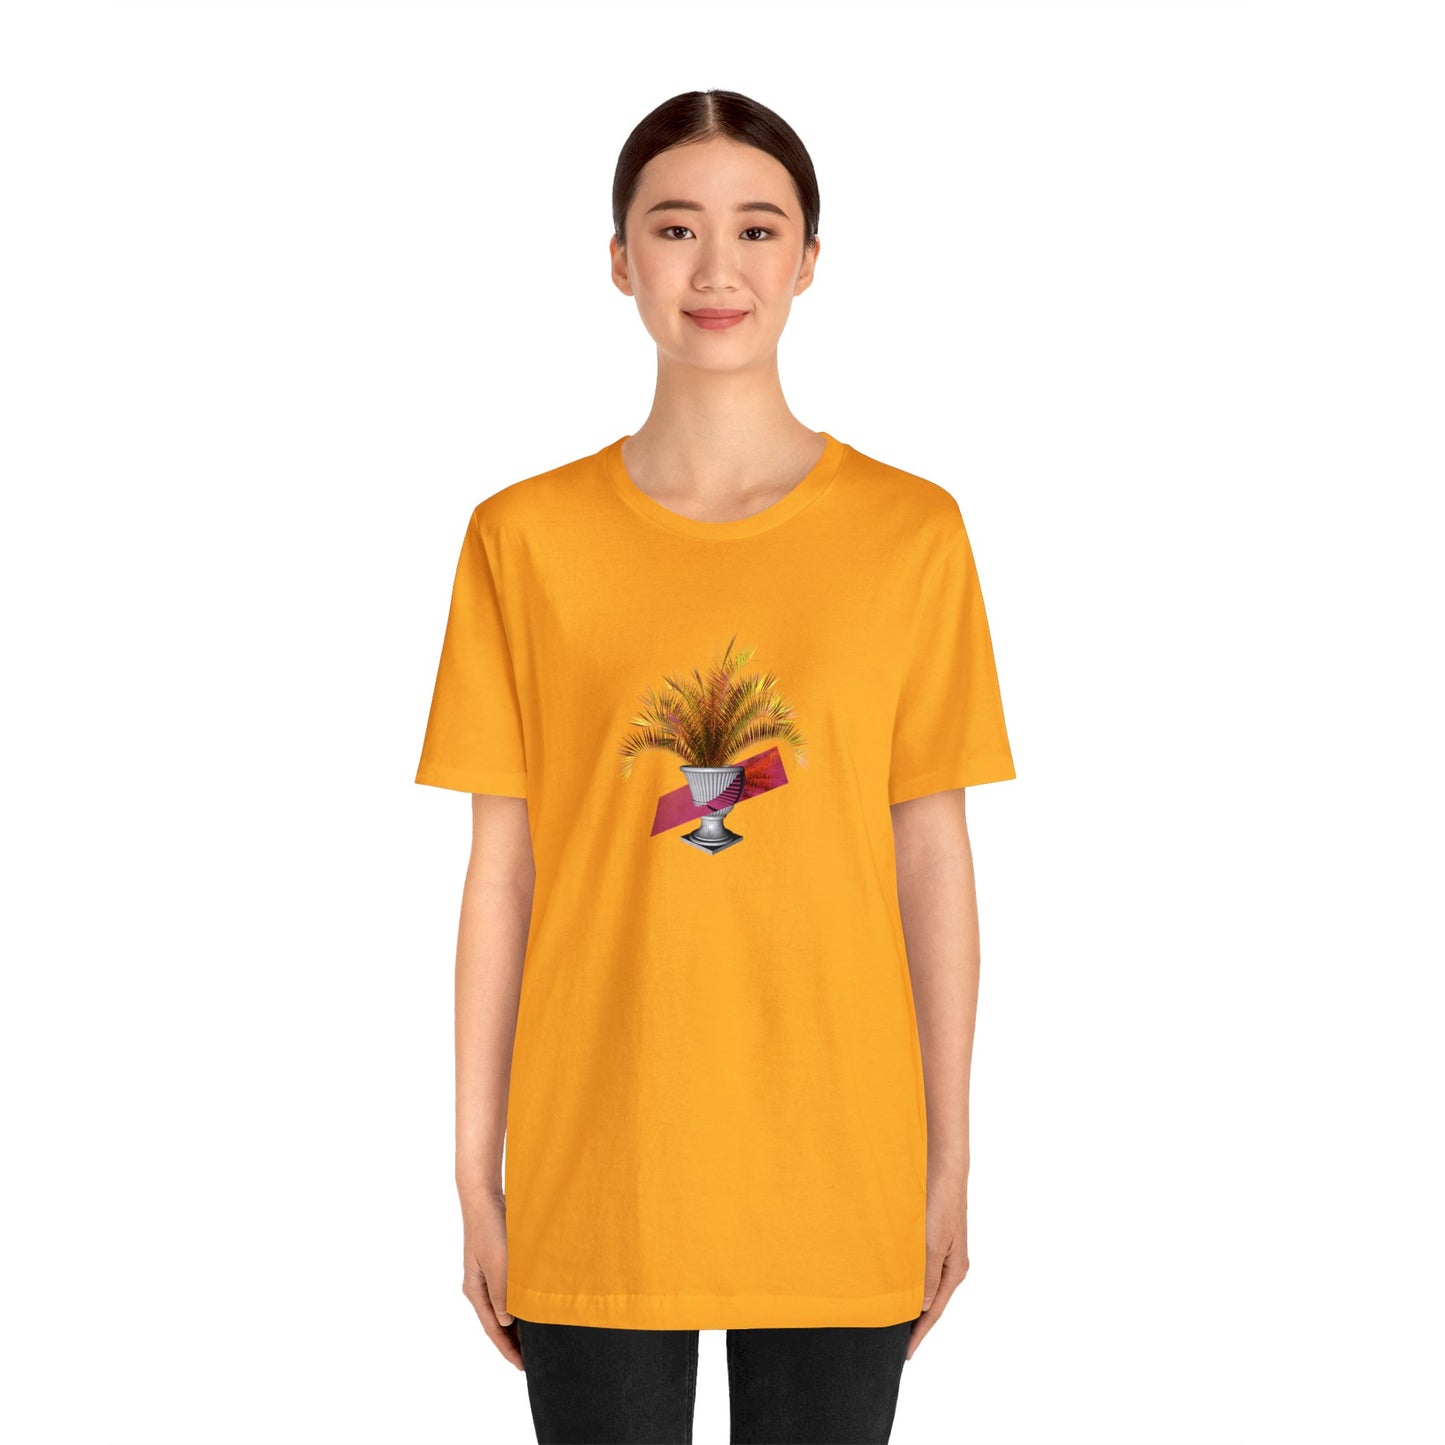 Glitchy Plant Unisex T-Shirt